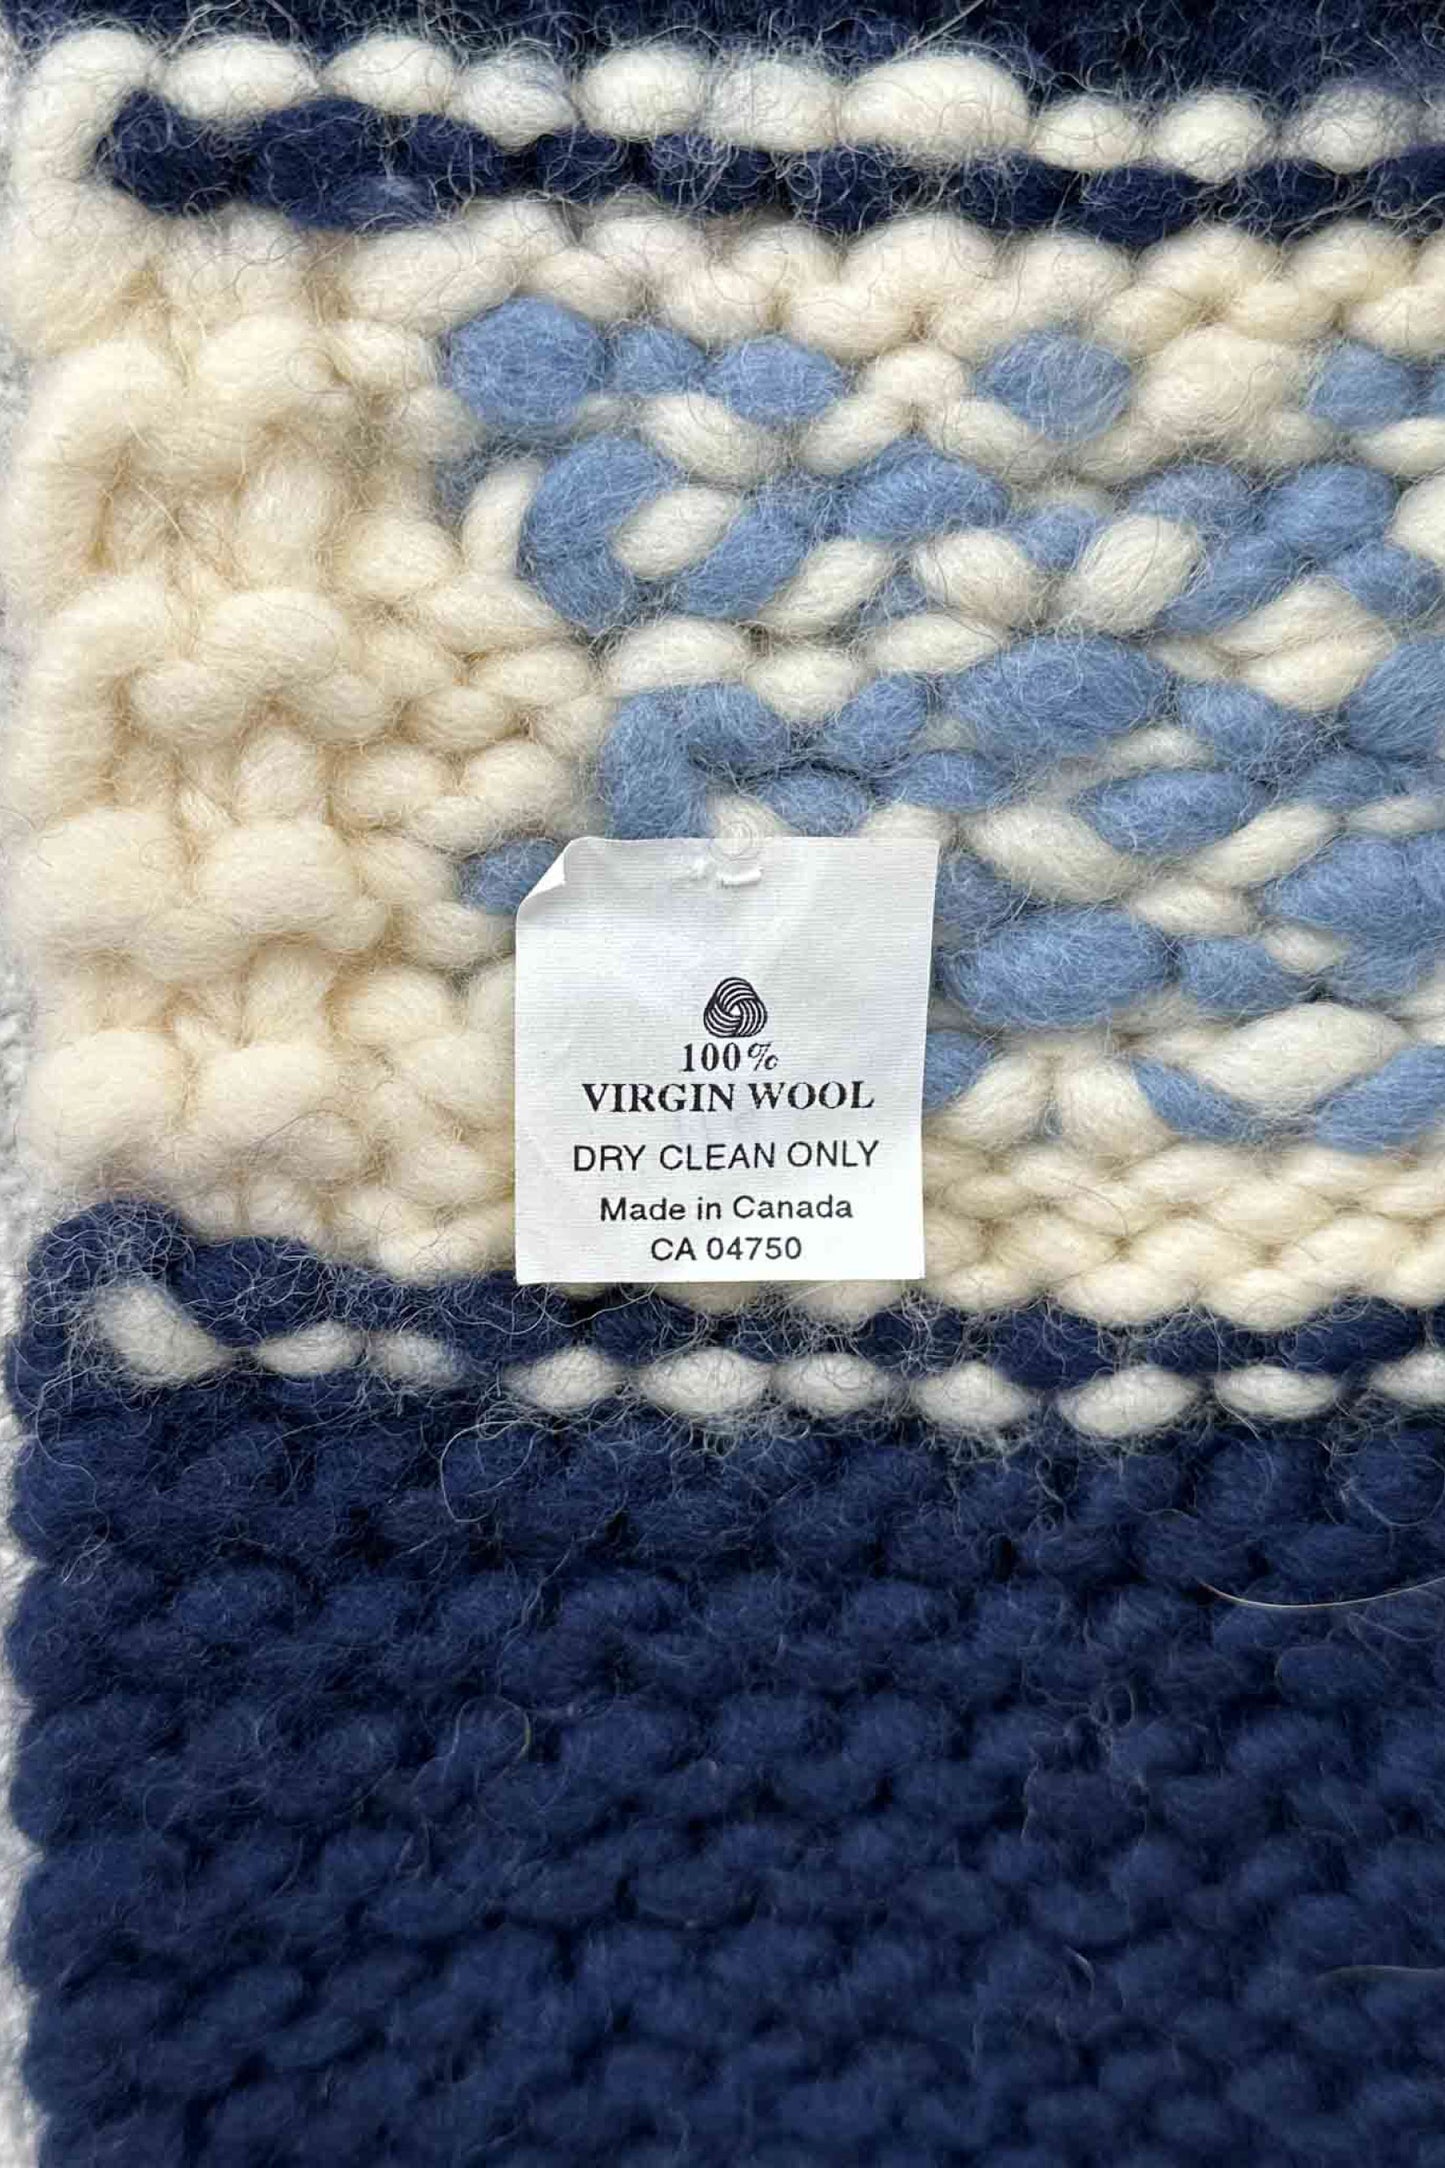 Made in Canada VIRGIN WOOL blue / white muffler